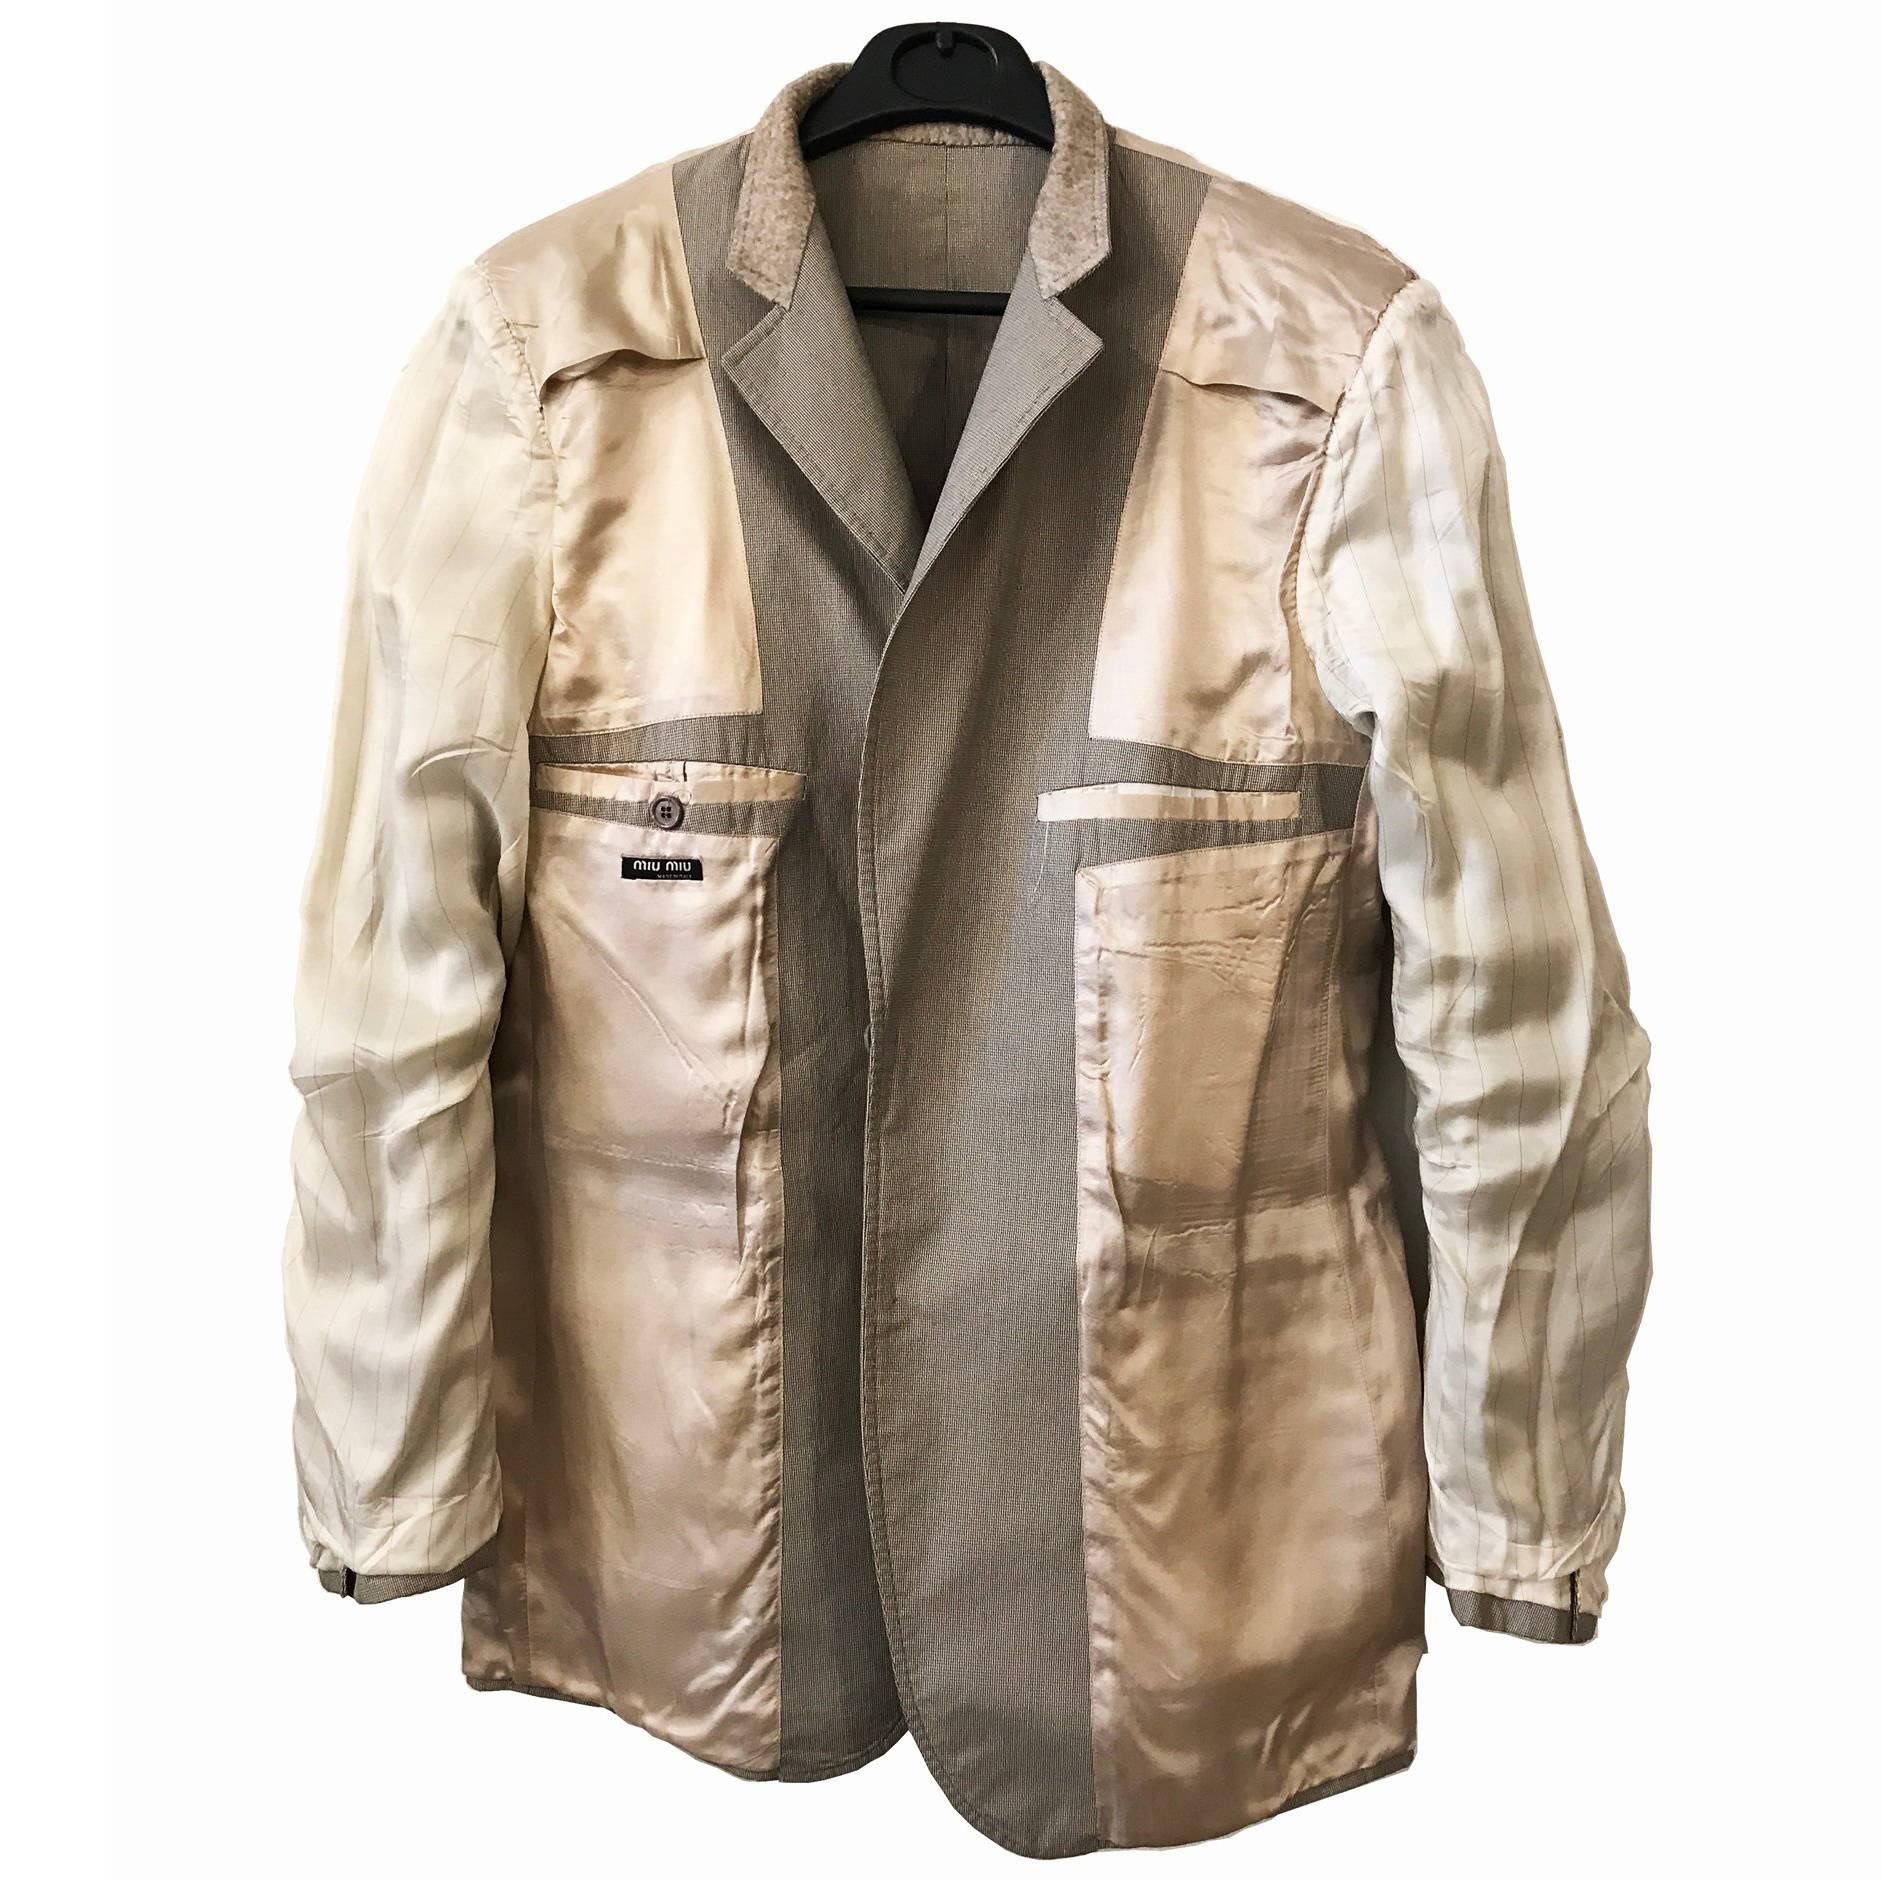 Miu Miu men's spring-summer season jacket For Sale